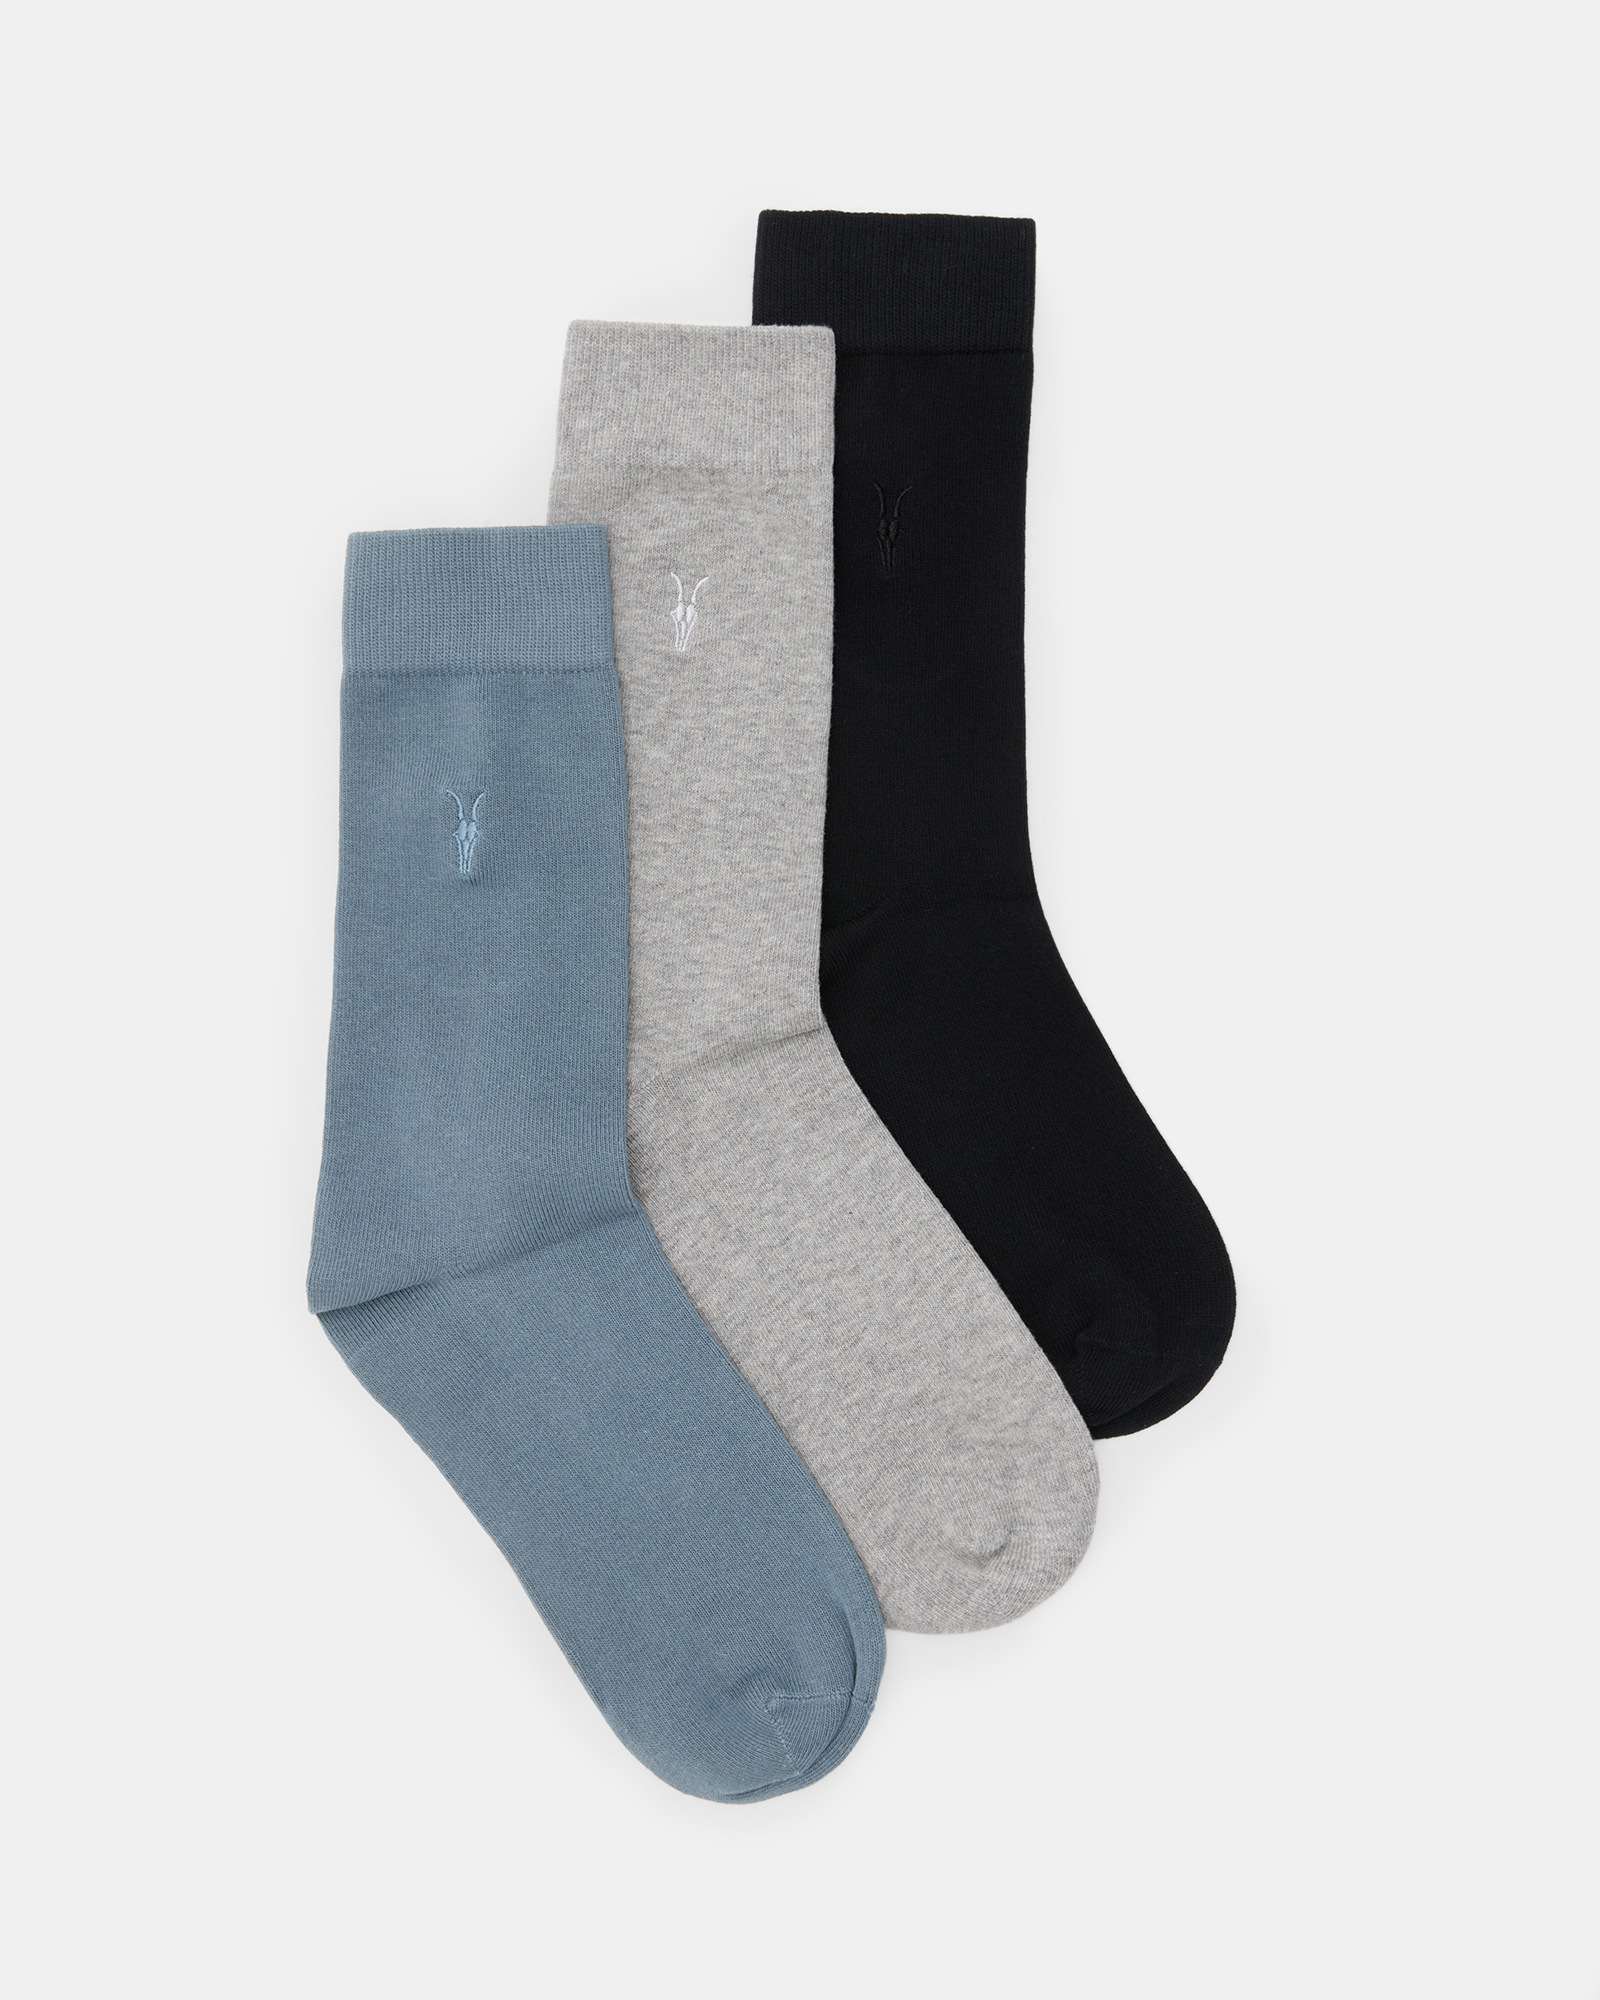 Adan Ramskull Embroidered Socks 3 Pack BLUE/GREY ML/BLK